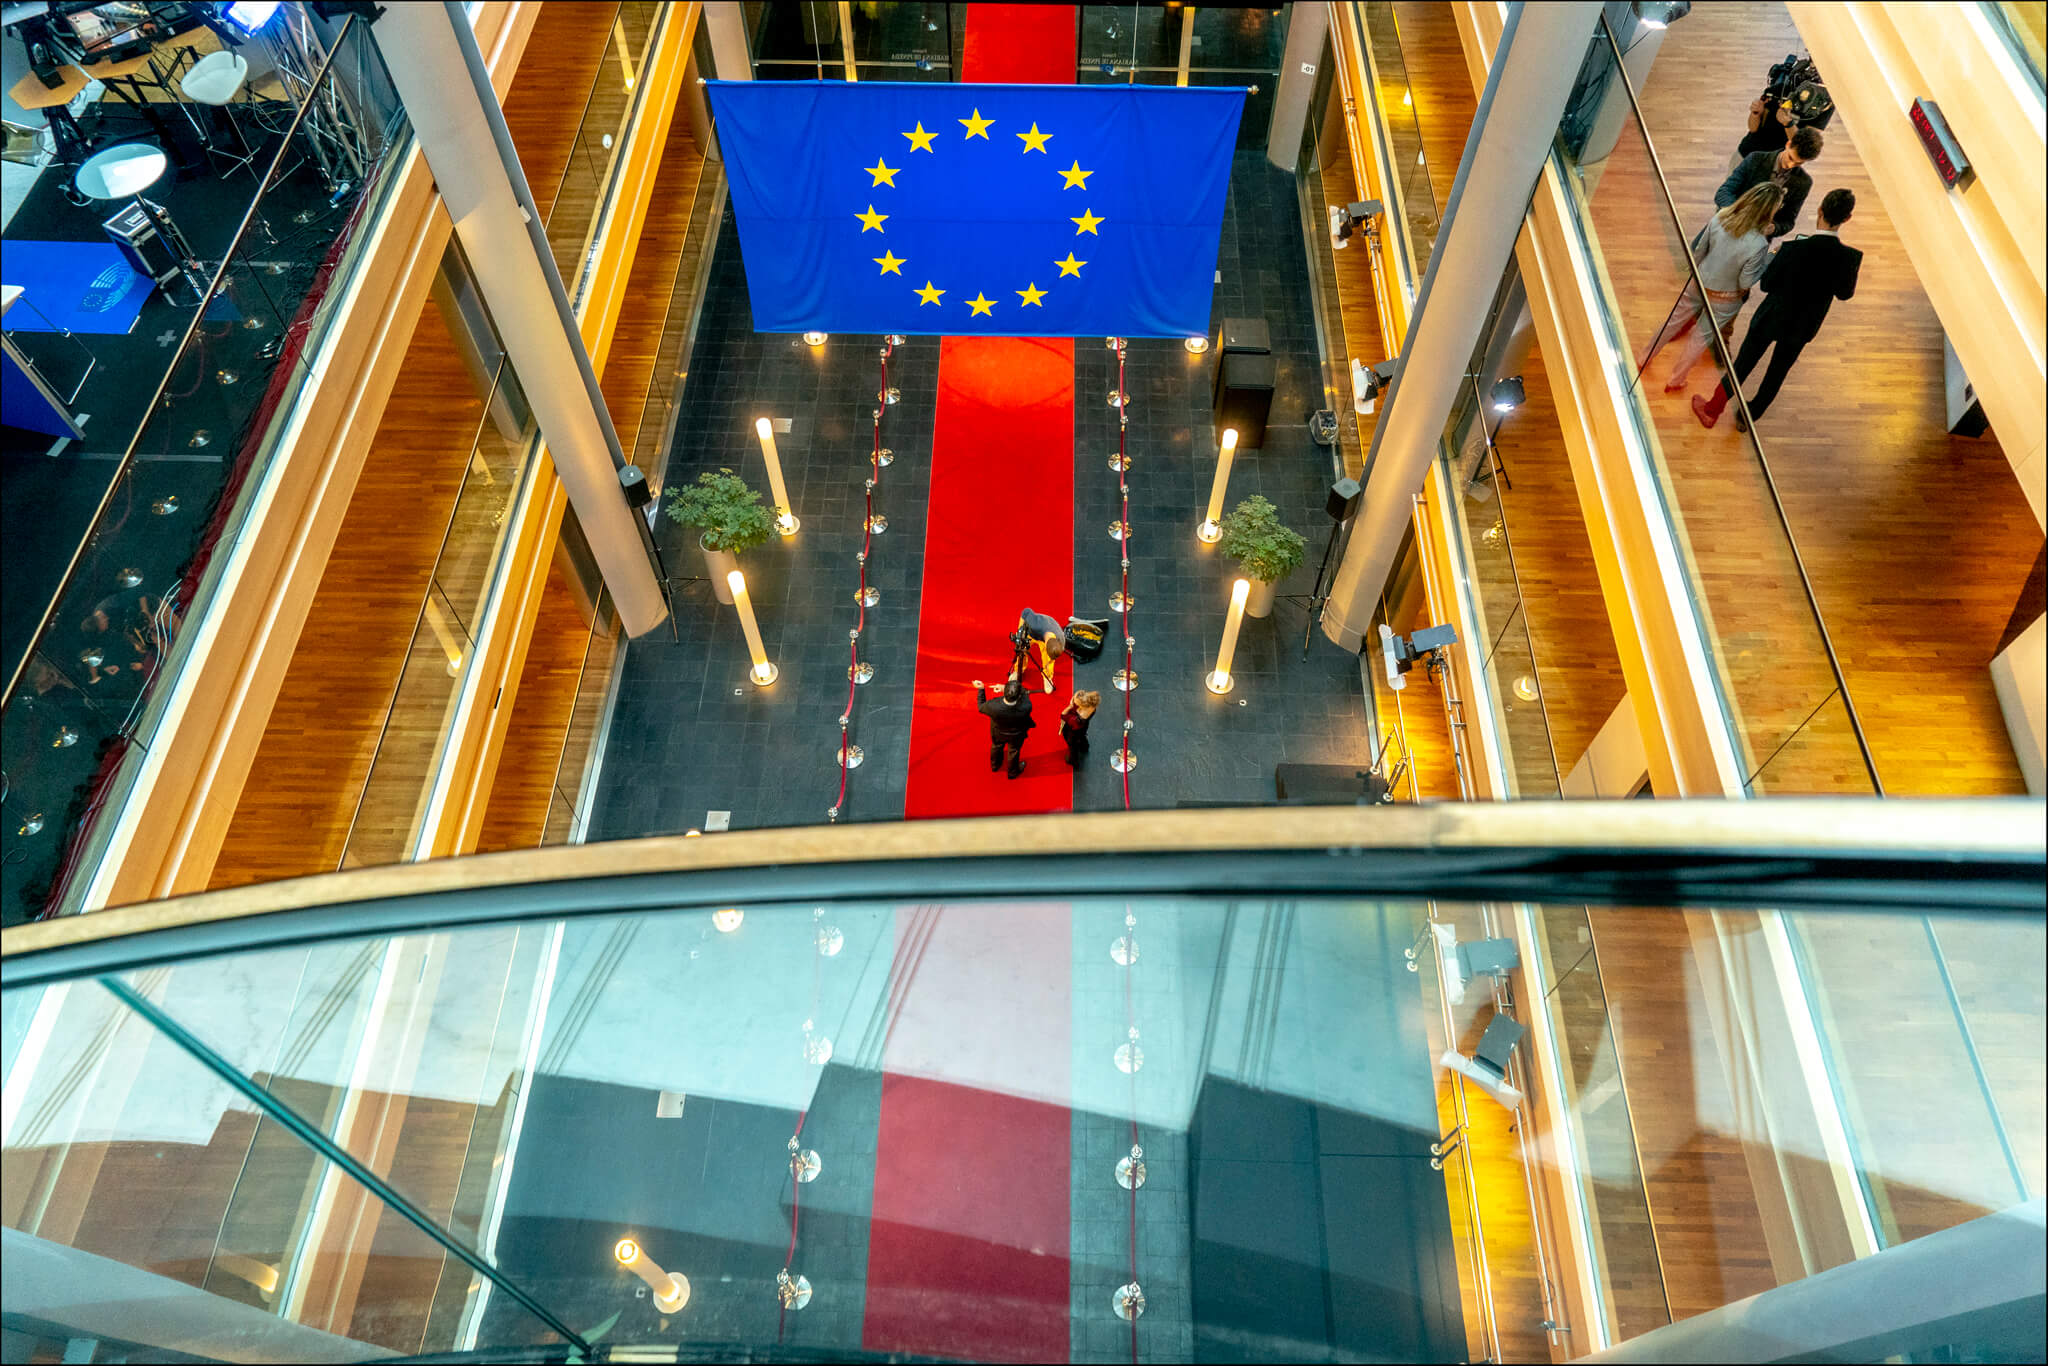 Entrance of the European Parliament. © European Parliament/Flickr